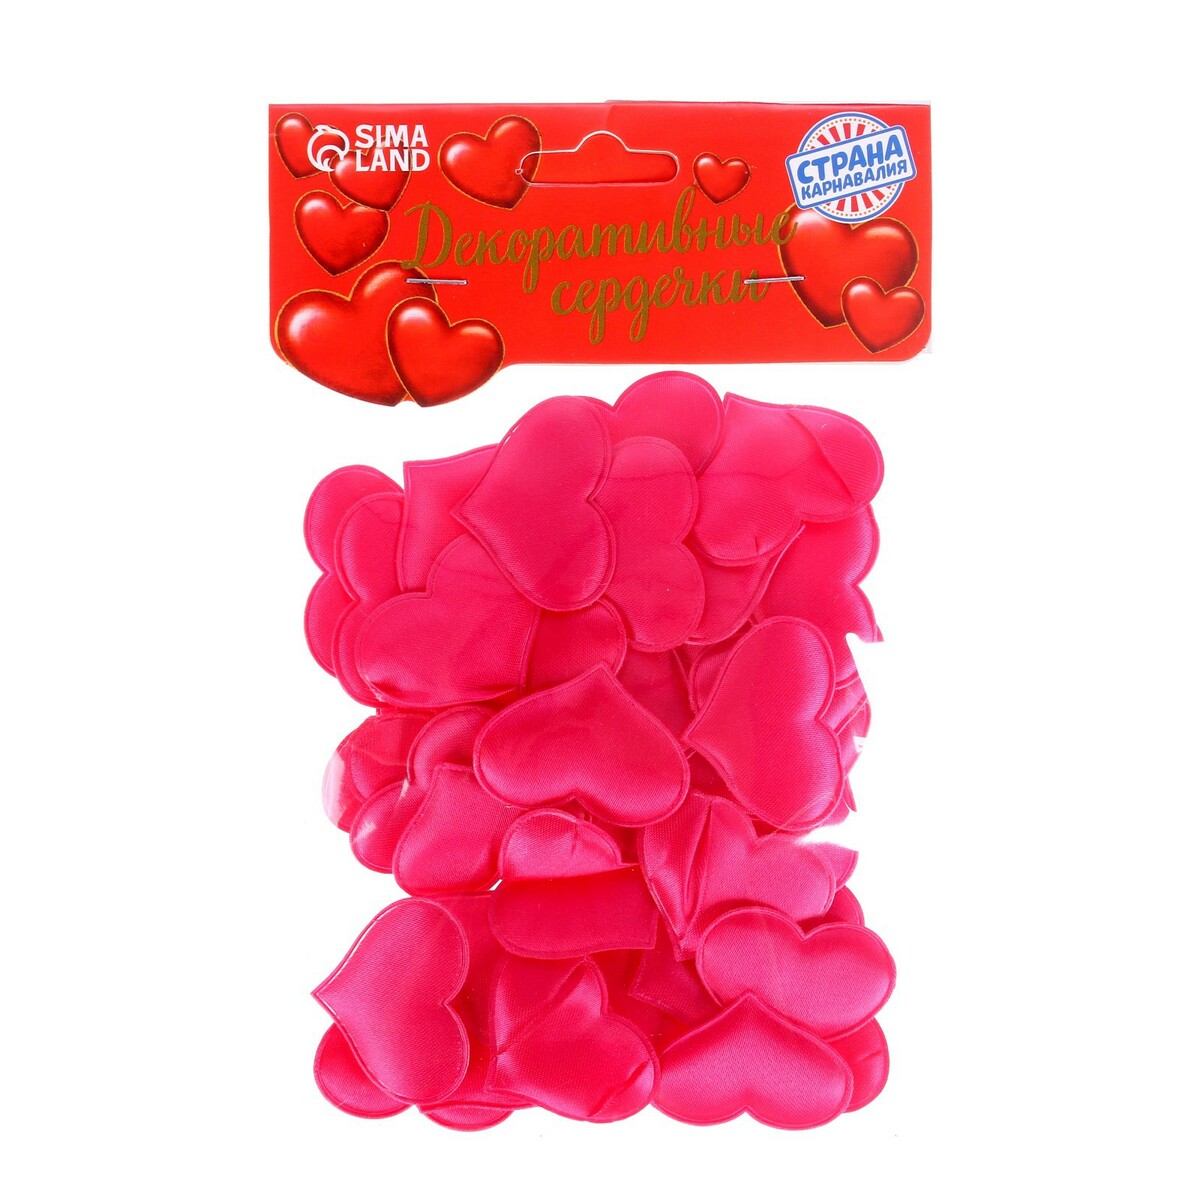 Сердечки декоративные, набор 50 шт., 3,2 см, цвет фуксия сердечки декоративные из лозы красные 2шт